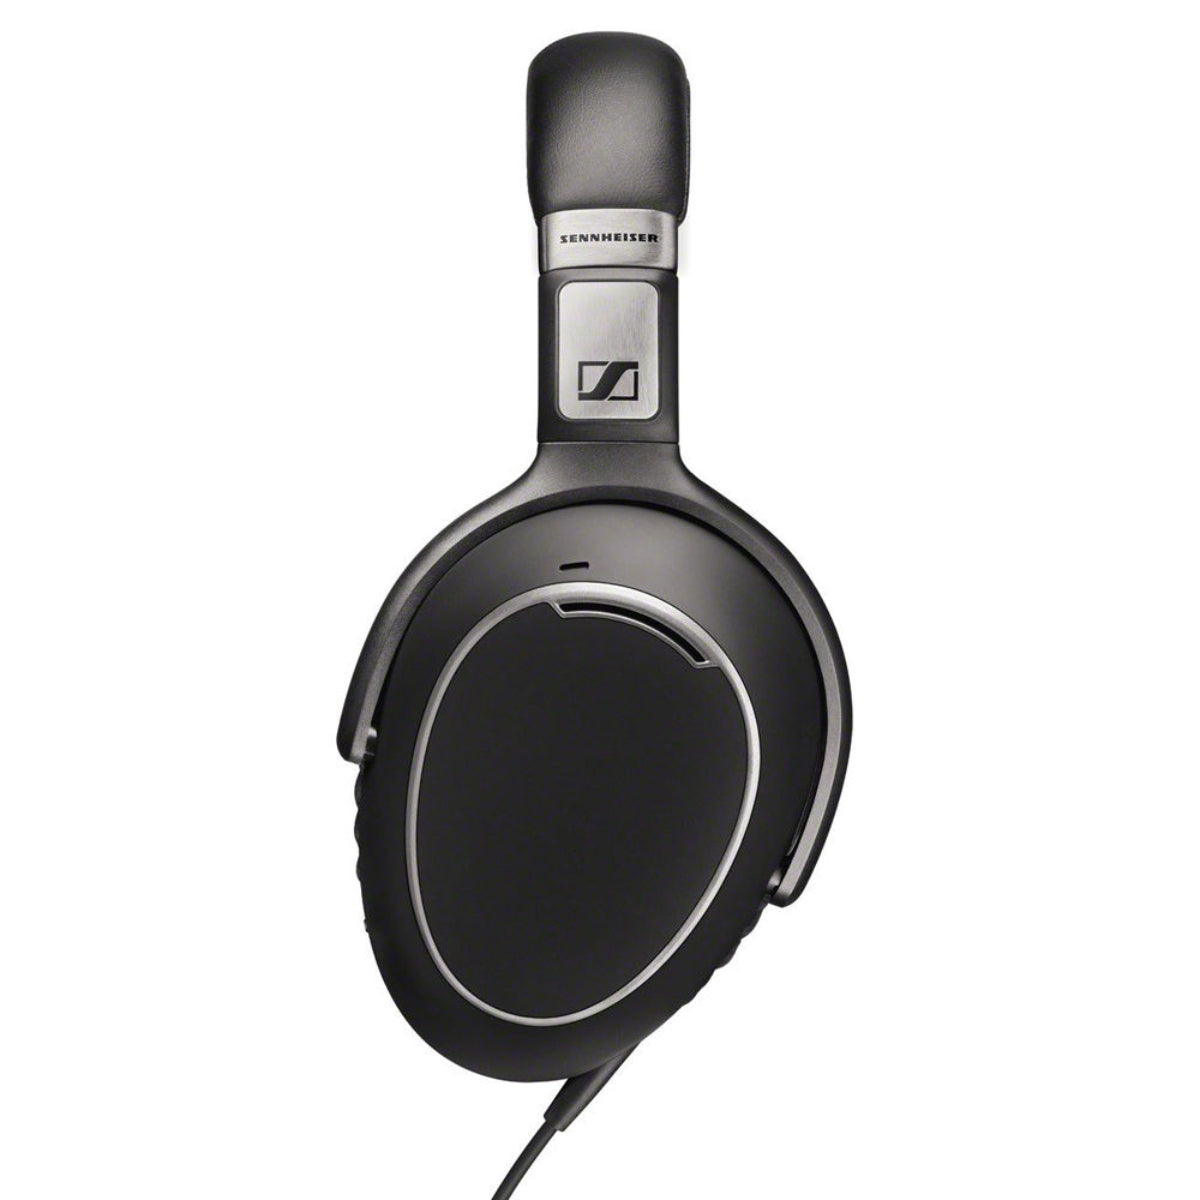 Sennheiser PXC 480 Stereo Noise Cancelling Headset, Circumaural, Foldable, USB Cable